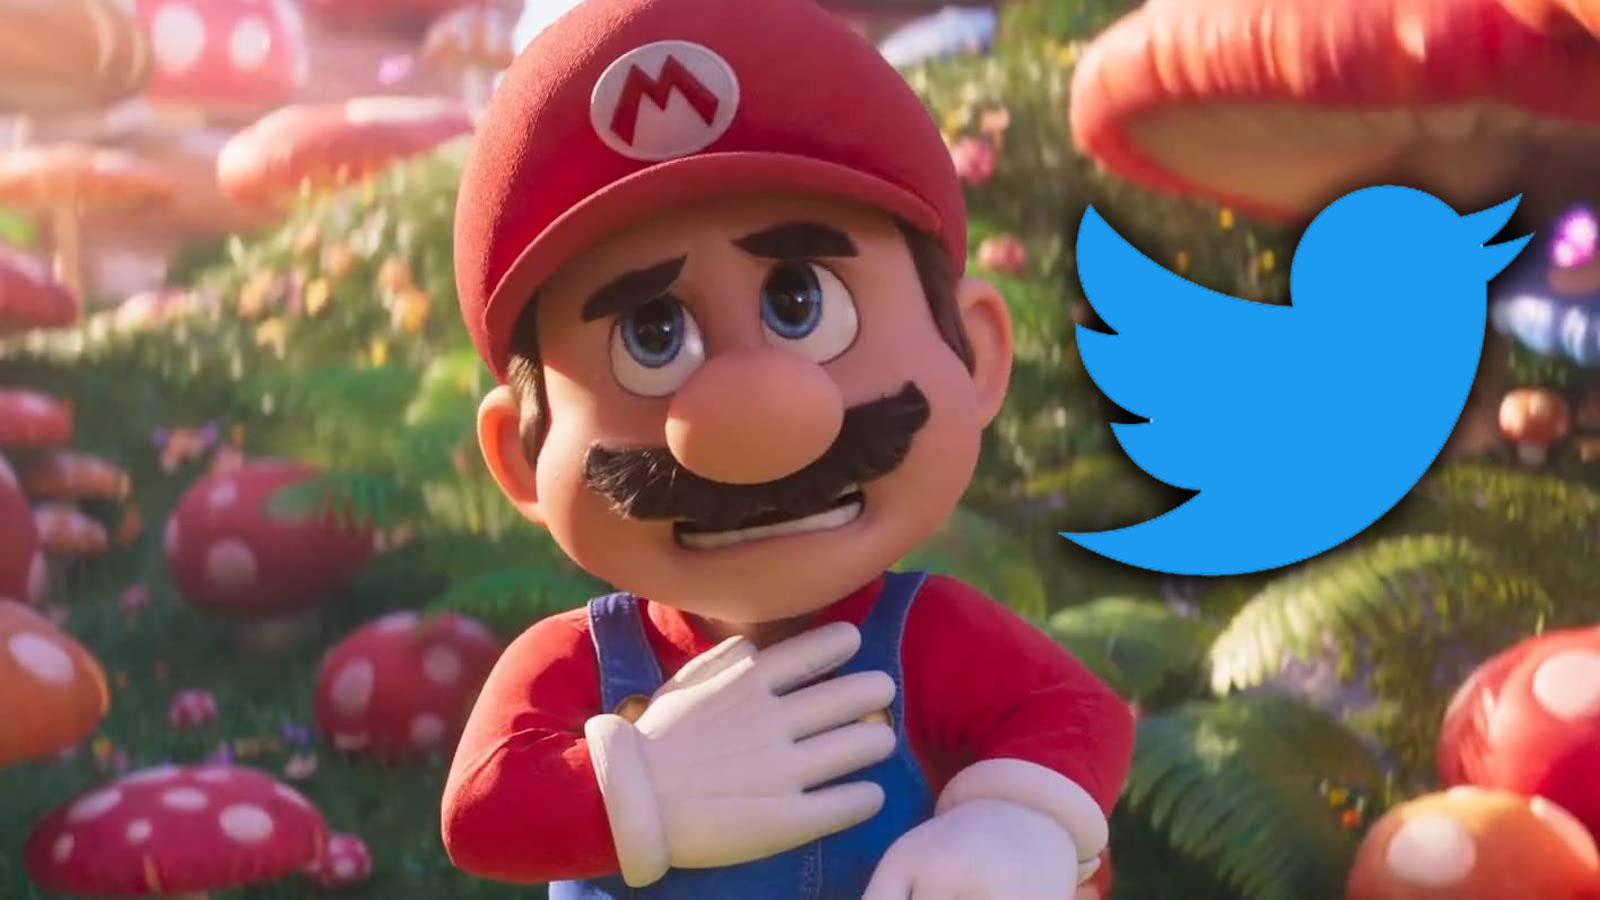 Mario from Super Mario Bros movie next to Twitter logo